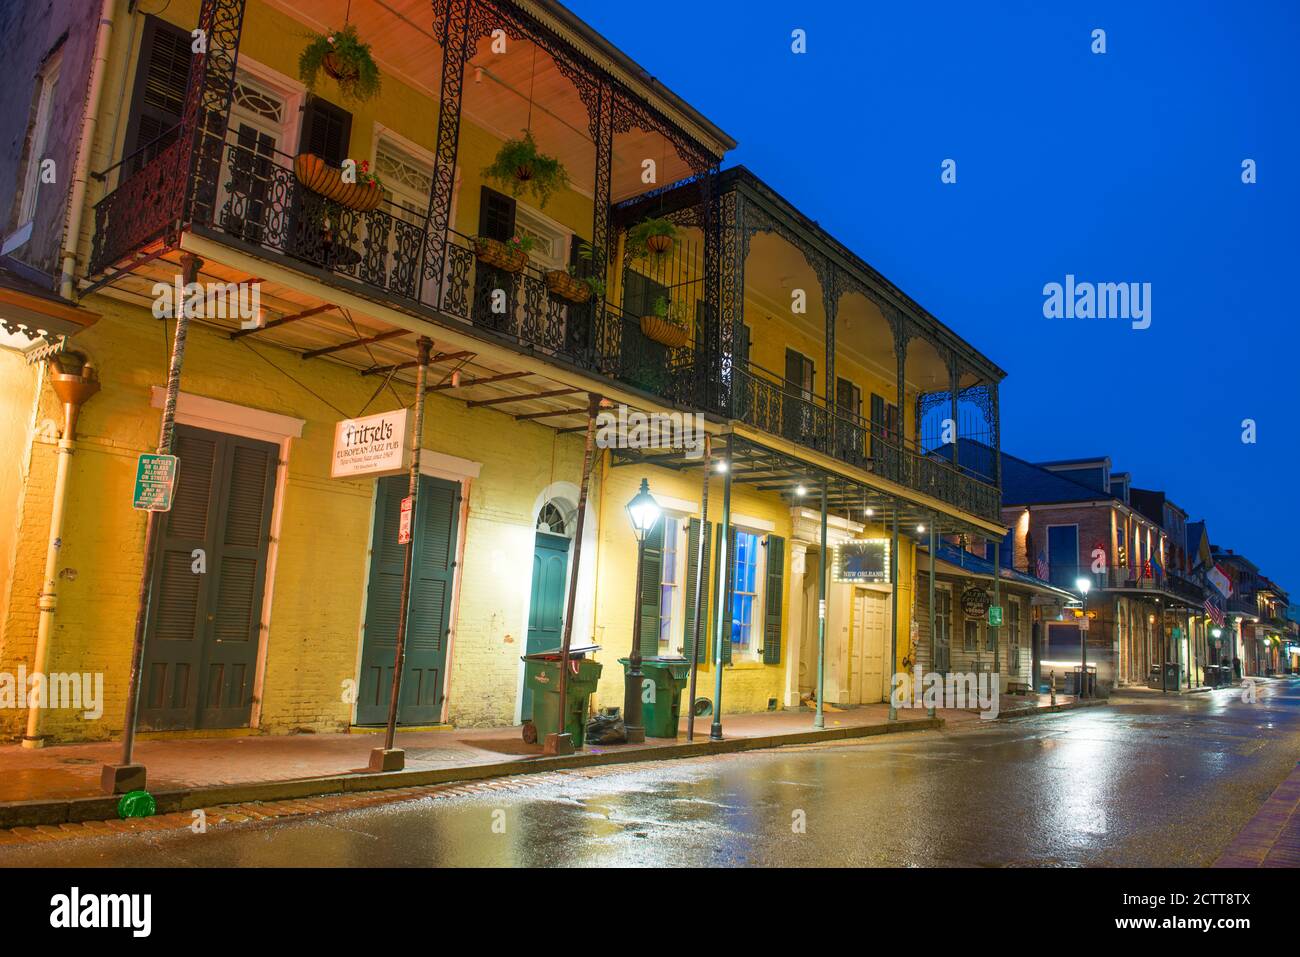 Edifici storici in Bourbon Street tra Orleans Street e St Ann Street nel quartiere francese di New Orleans, Louisiana, USA. Foto Stock